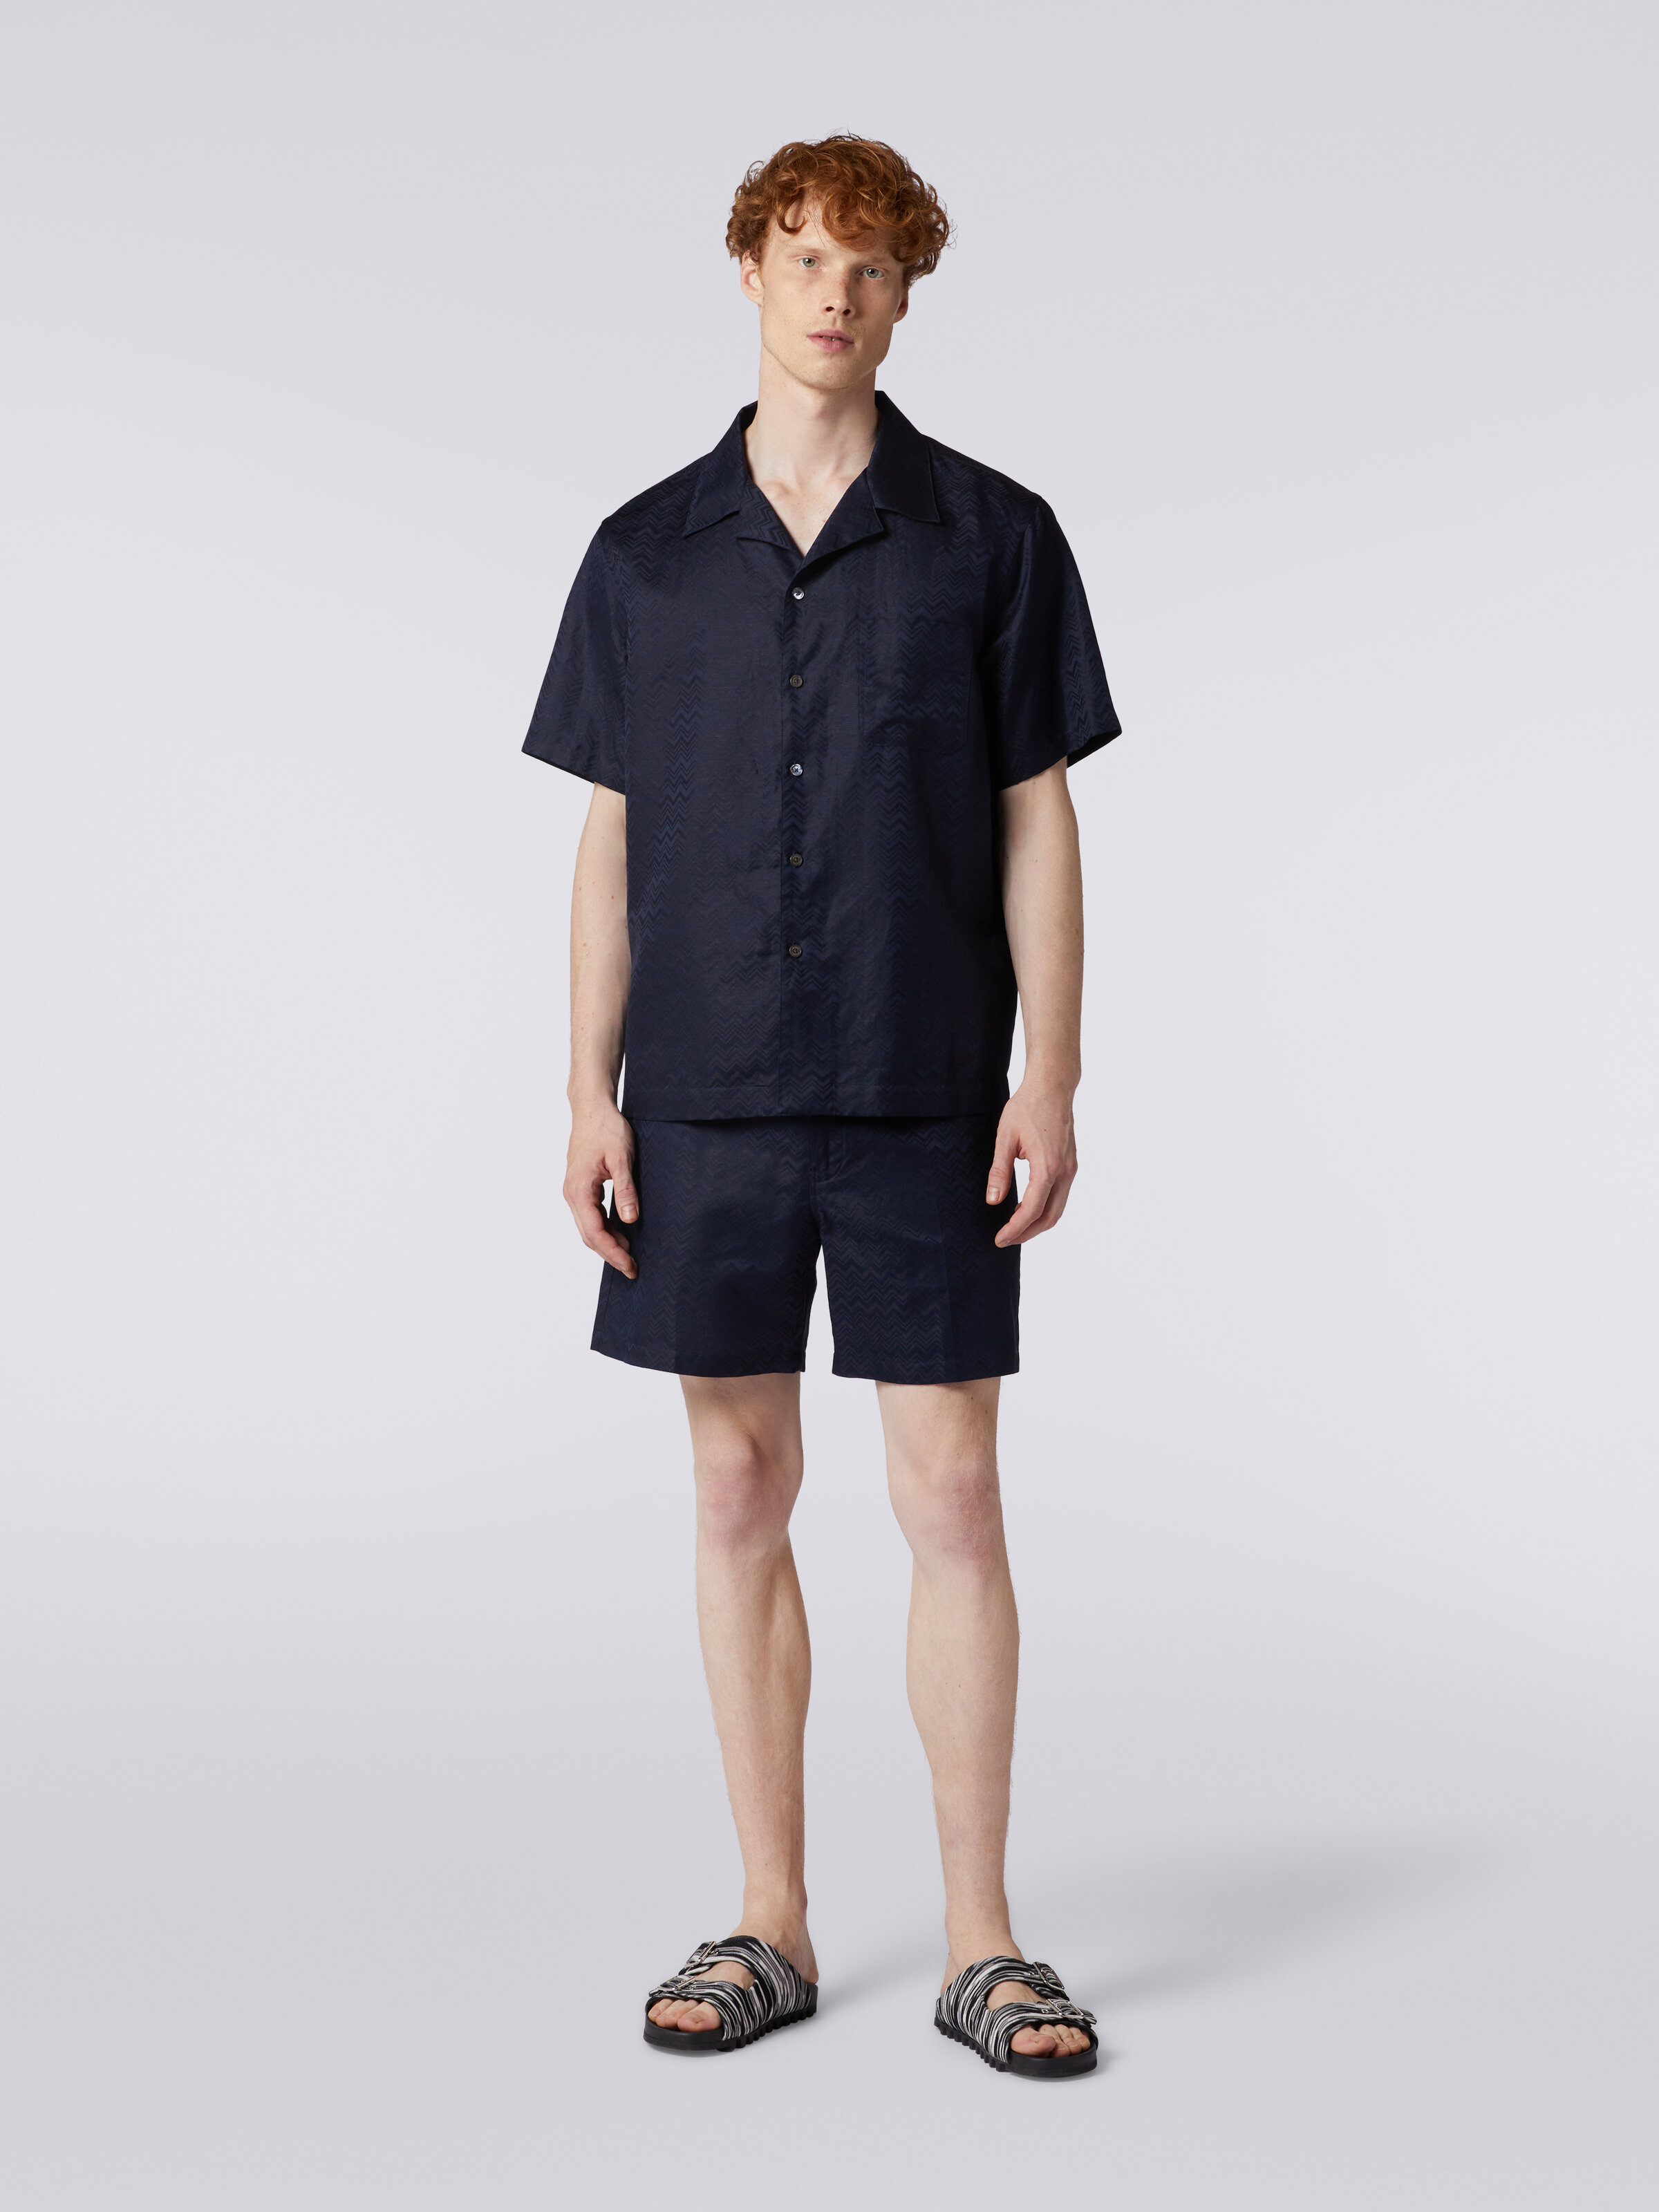 Short-sleeved chevron cotton blend bowling shirt, Dark Blue - 1